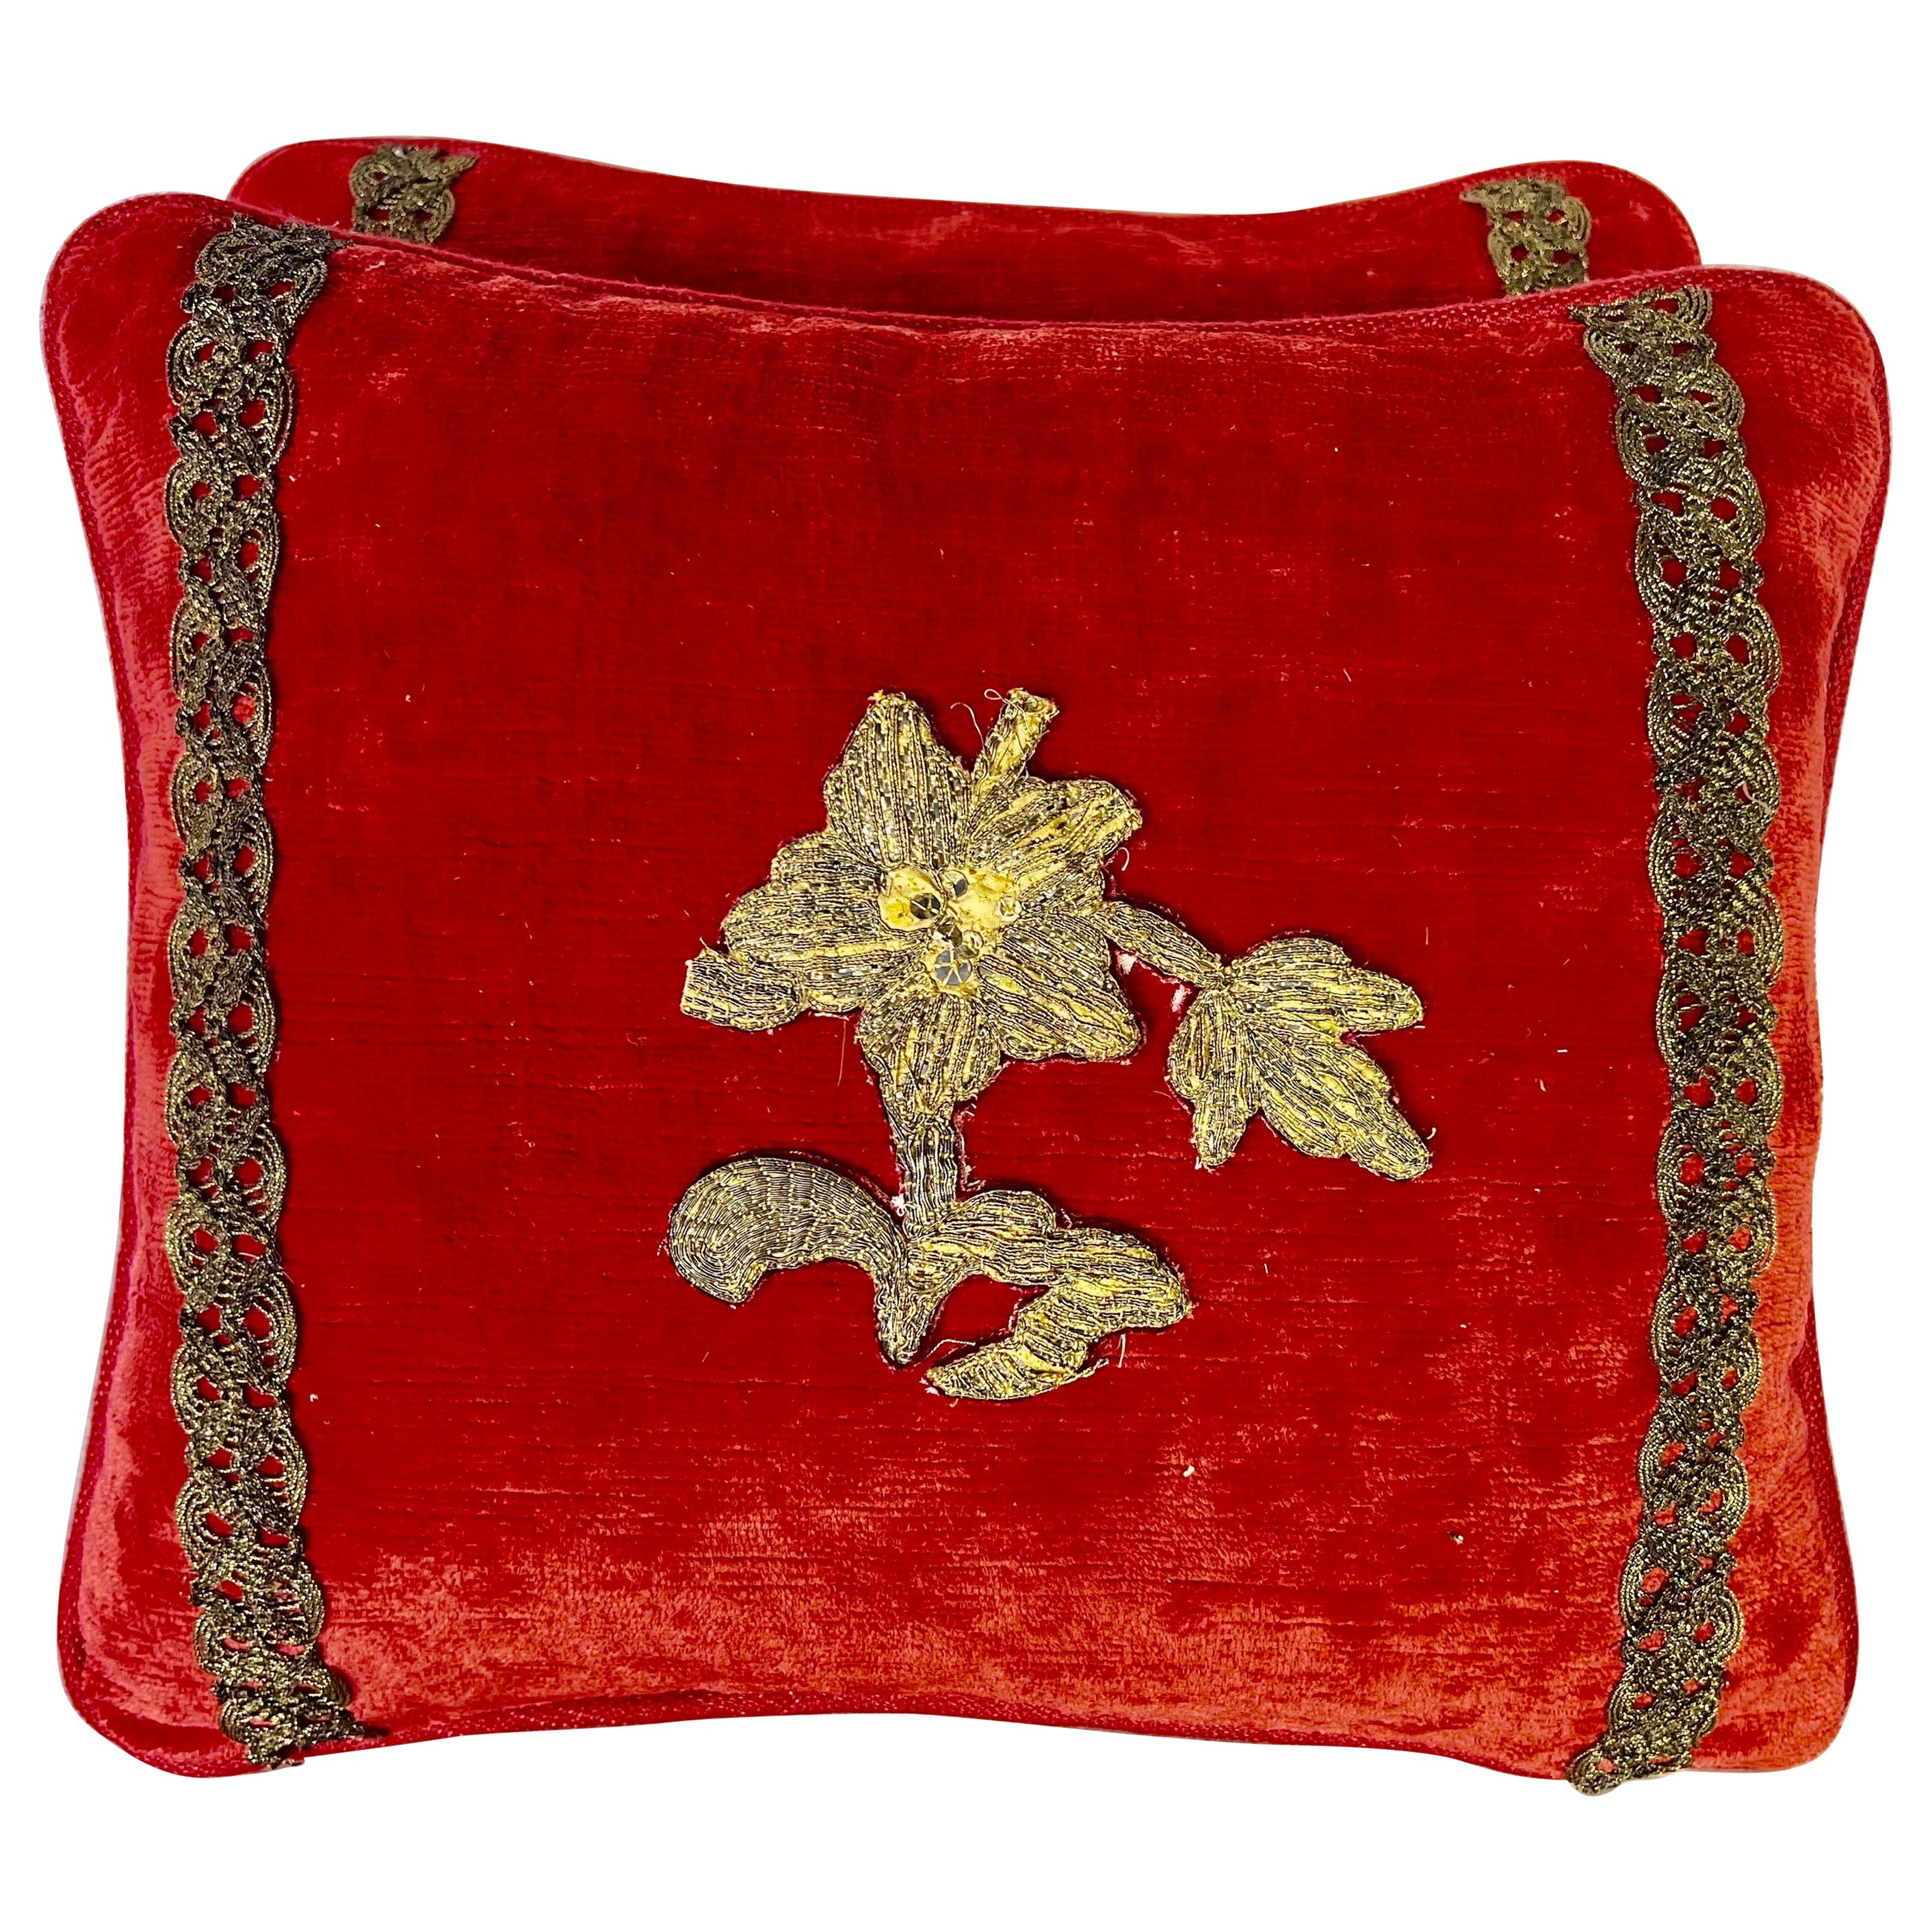 Pair of Appliquéd Red Velvet Pillows by MLA